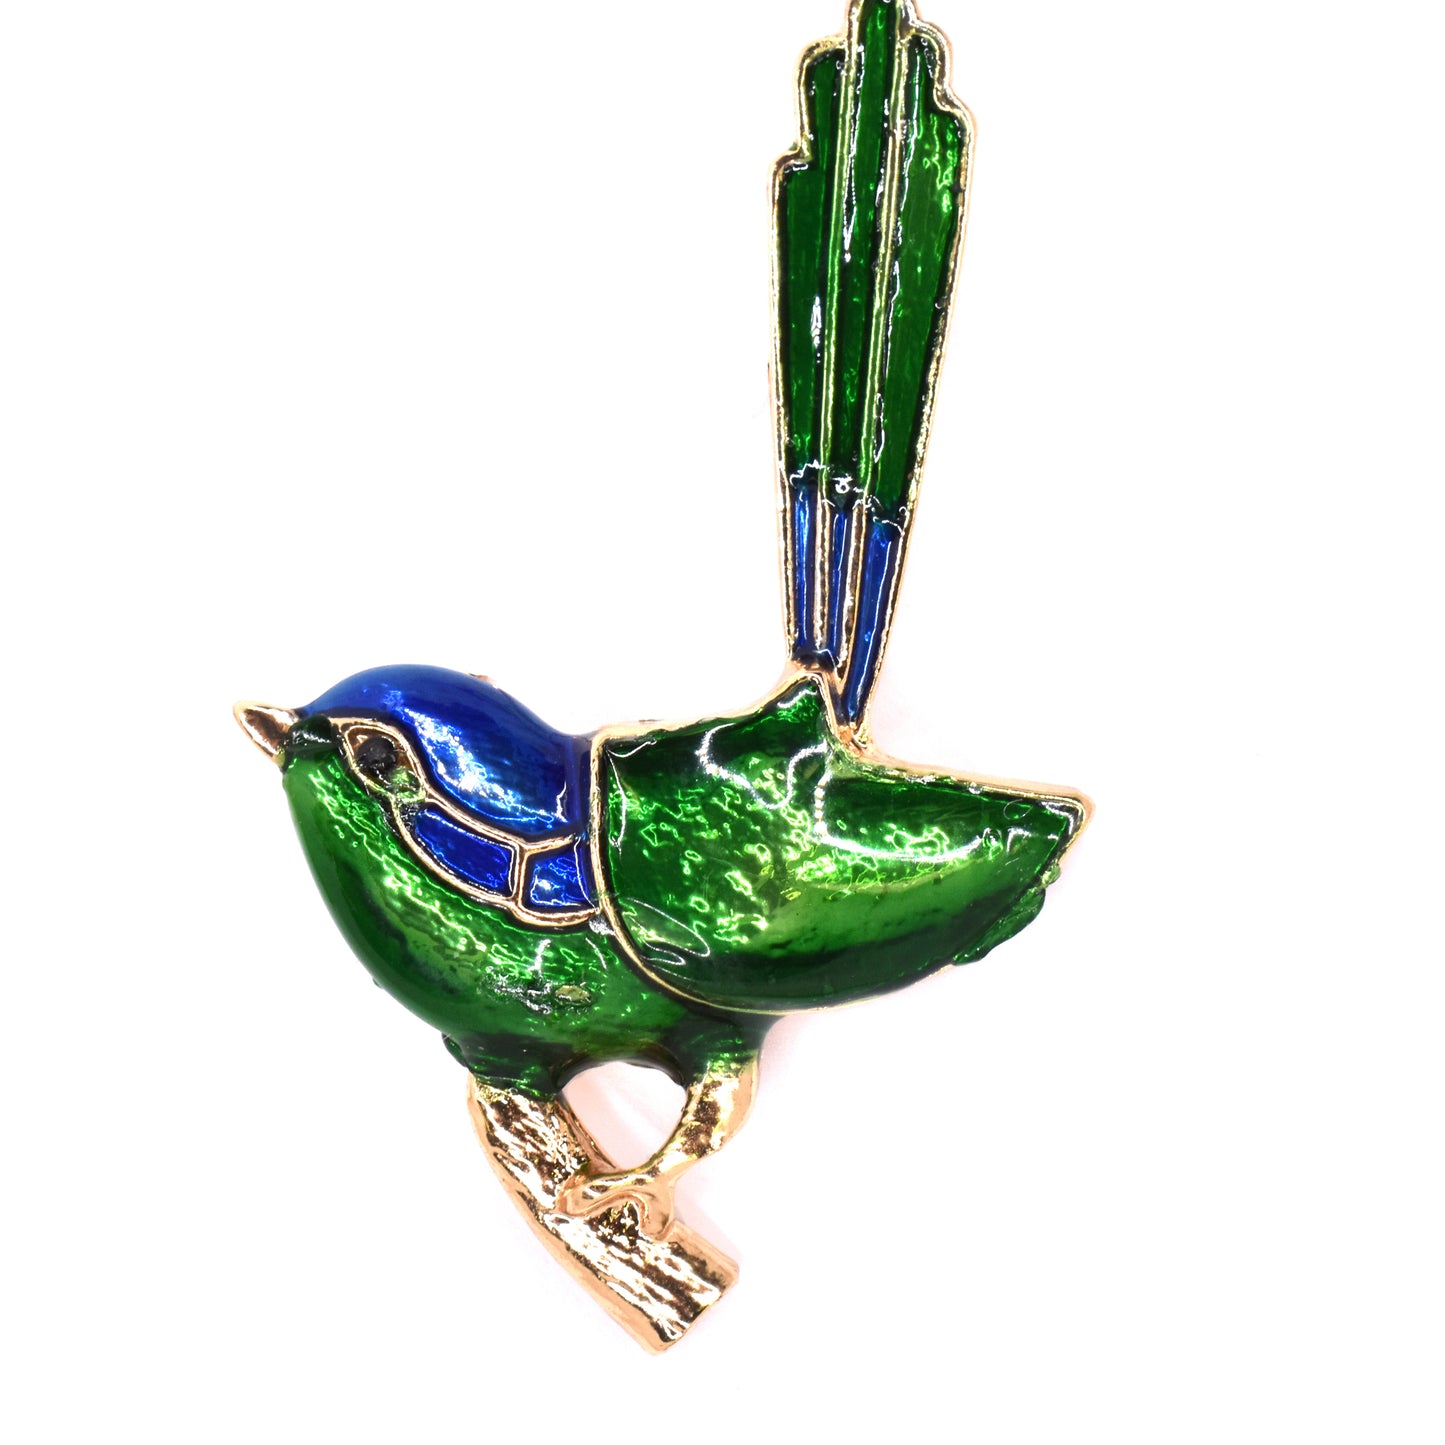 Fashion stylized enamel green bird brooch